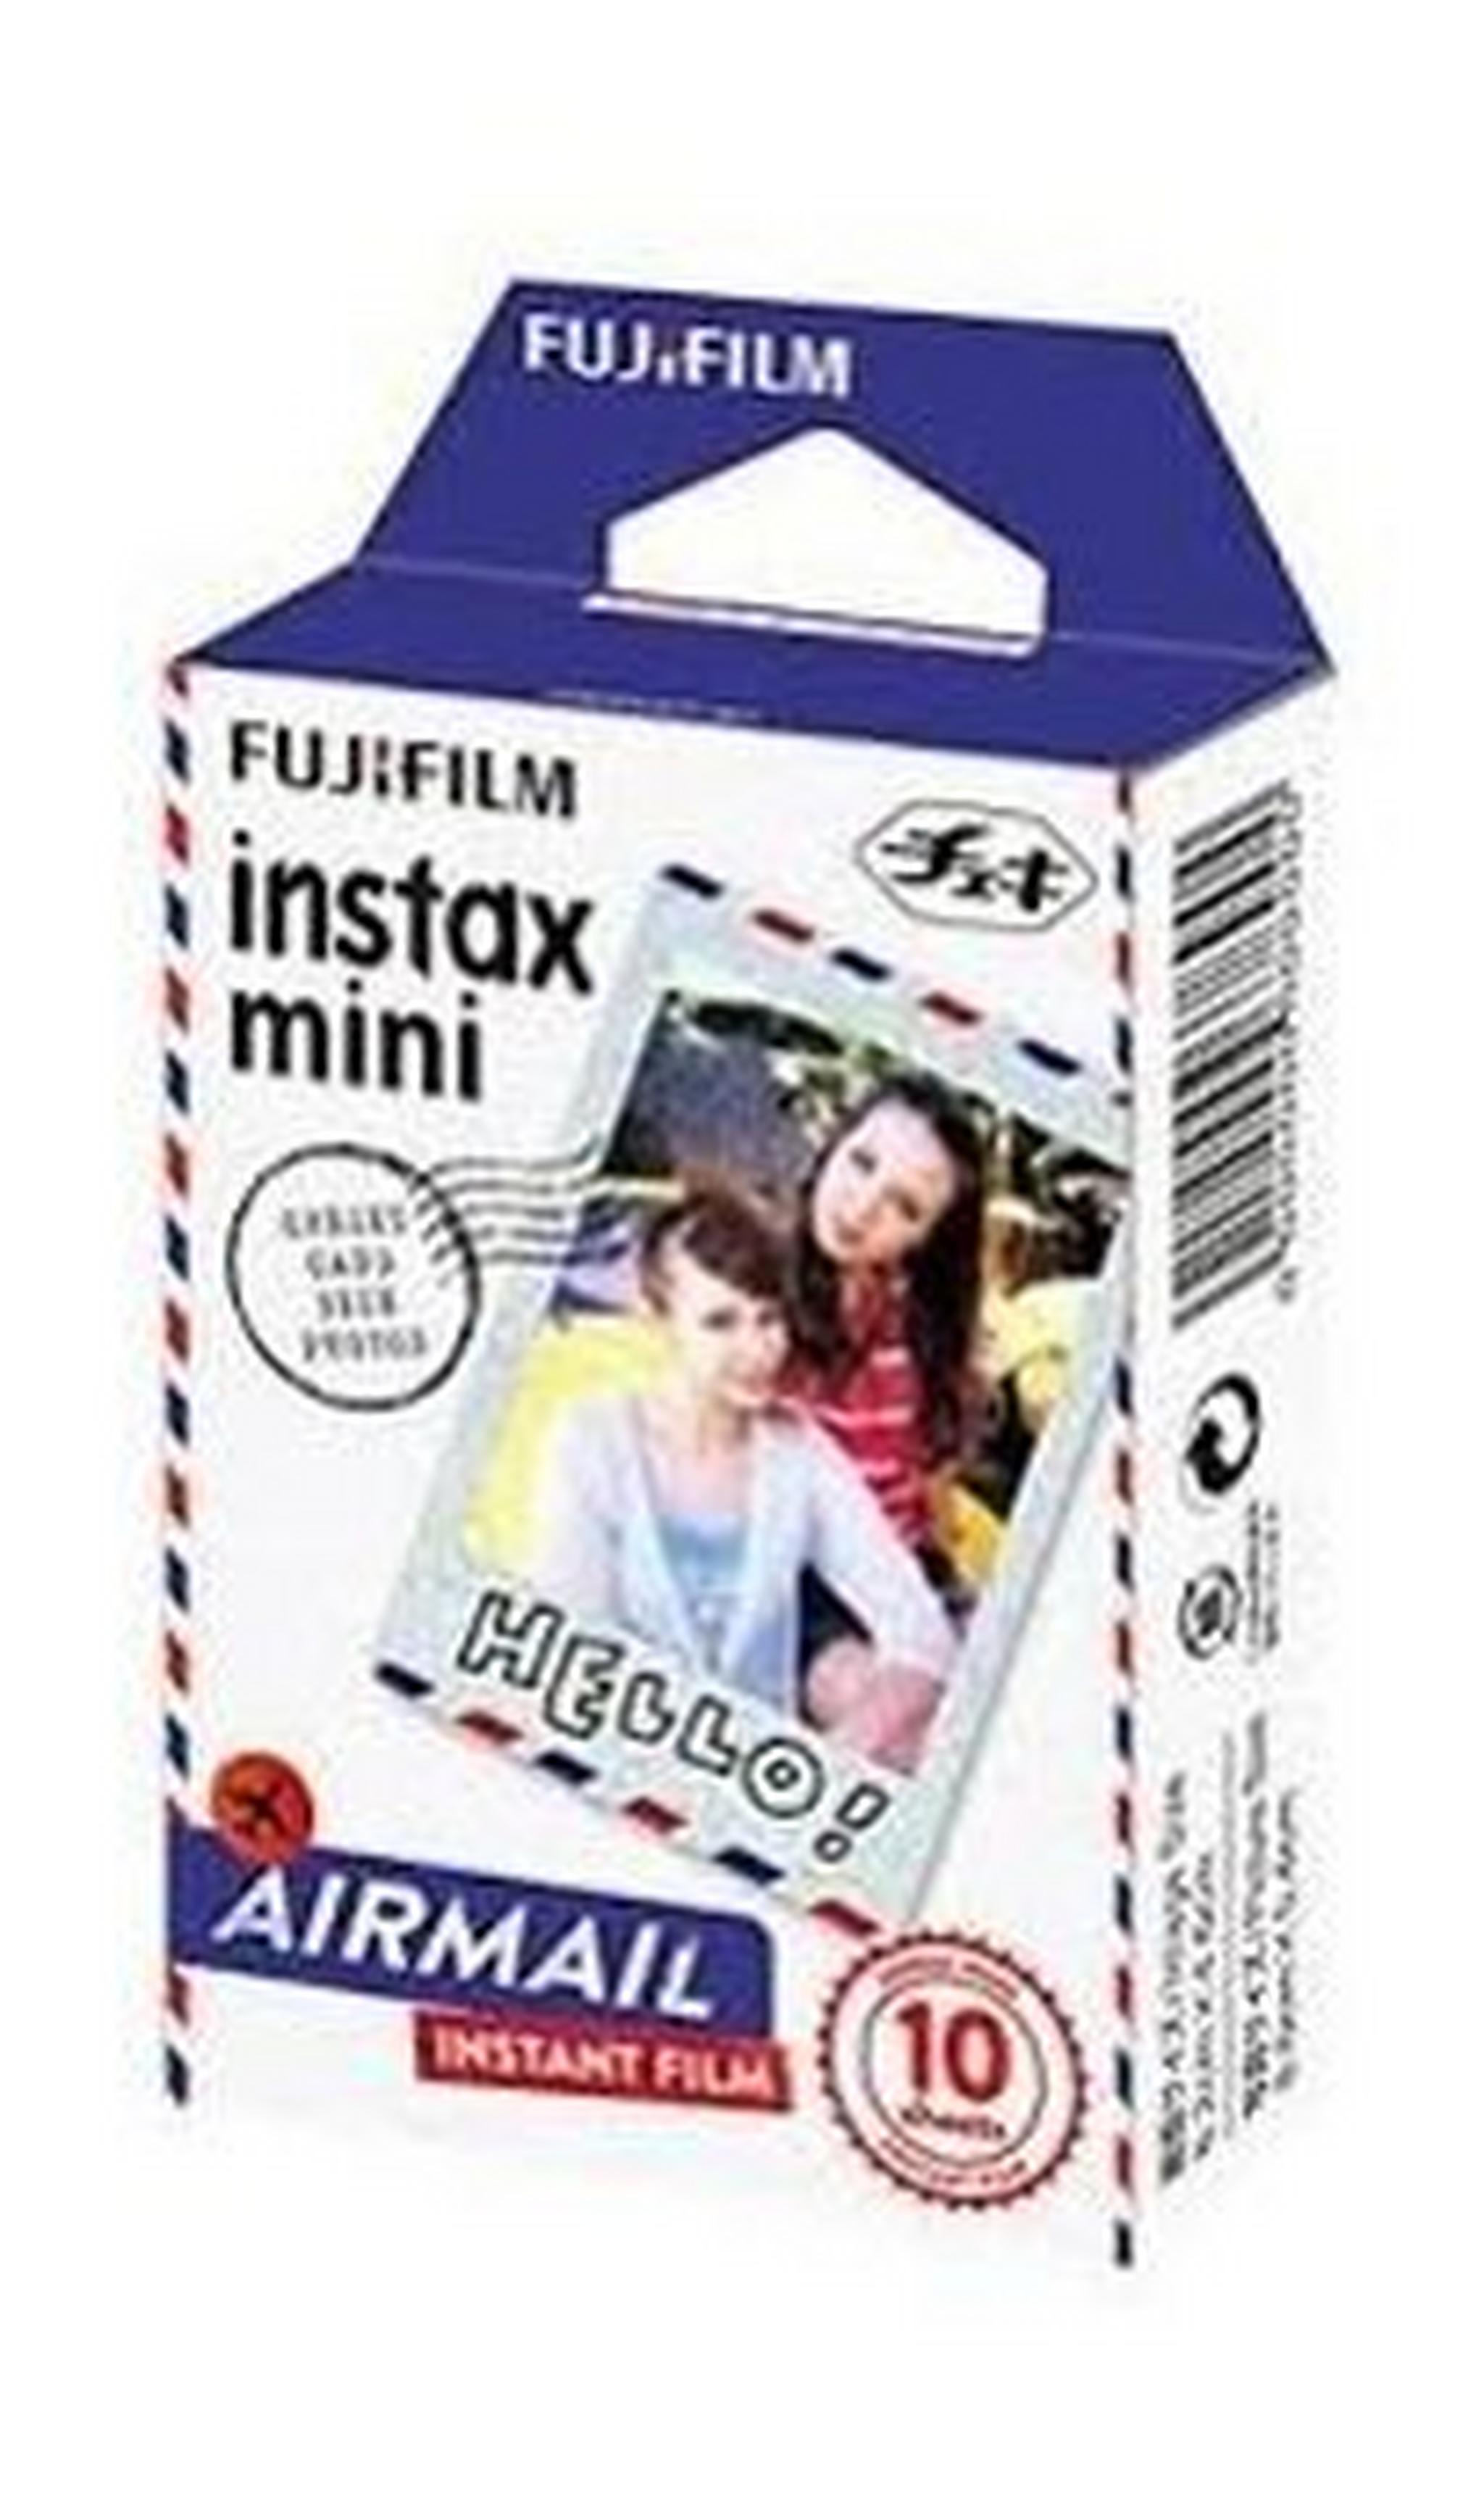 Fujifilm Instax Mini Air Mail Film – 10 Sheets Per Pack